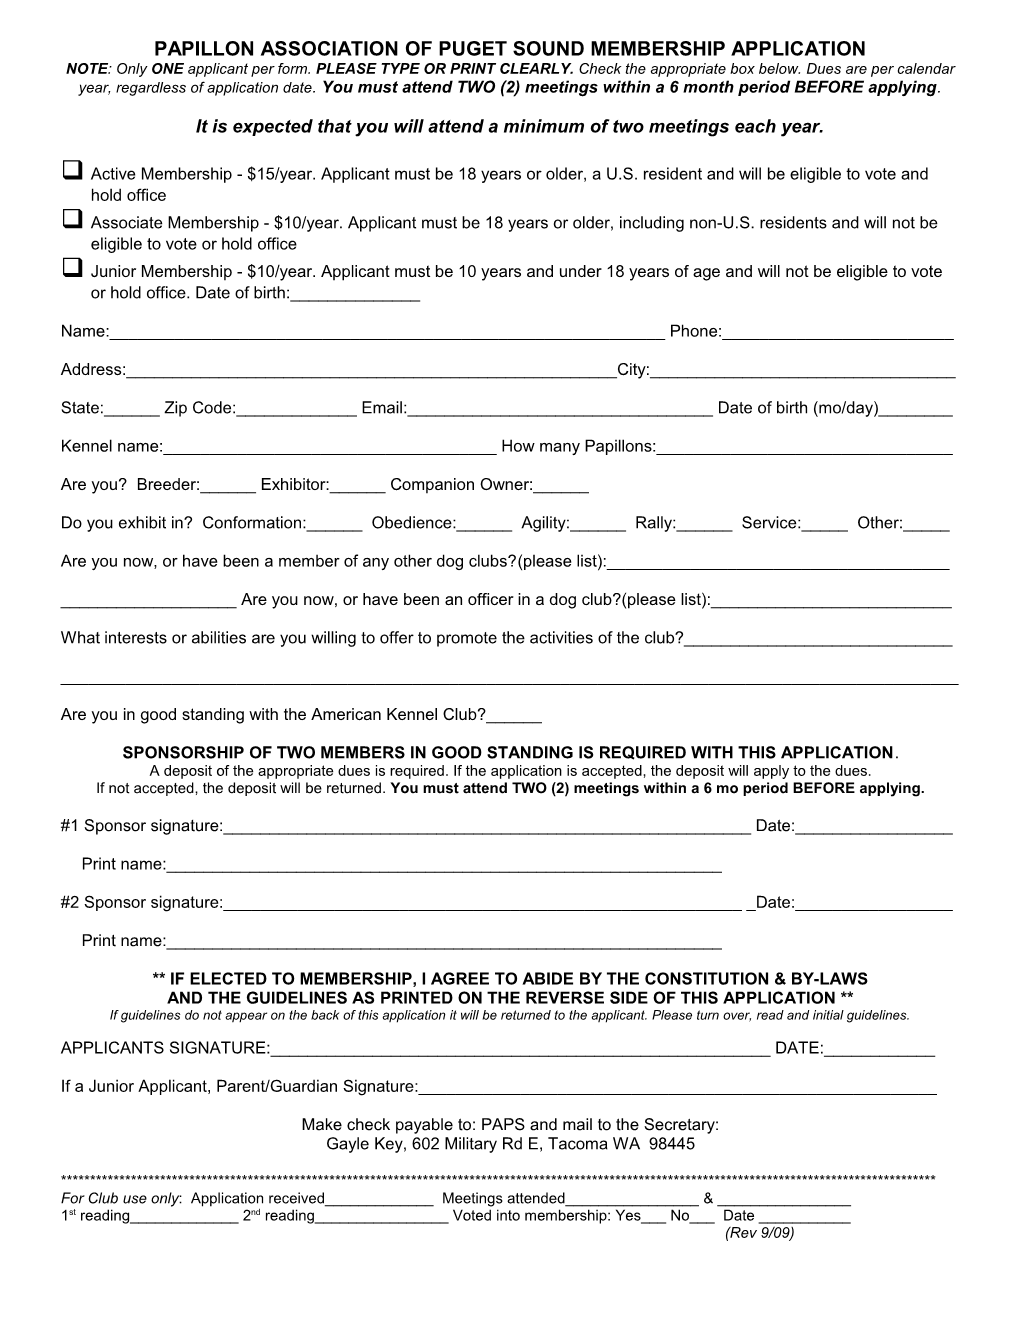 Papillon Association of Puget Sound Membership Application